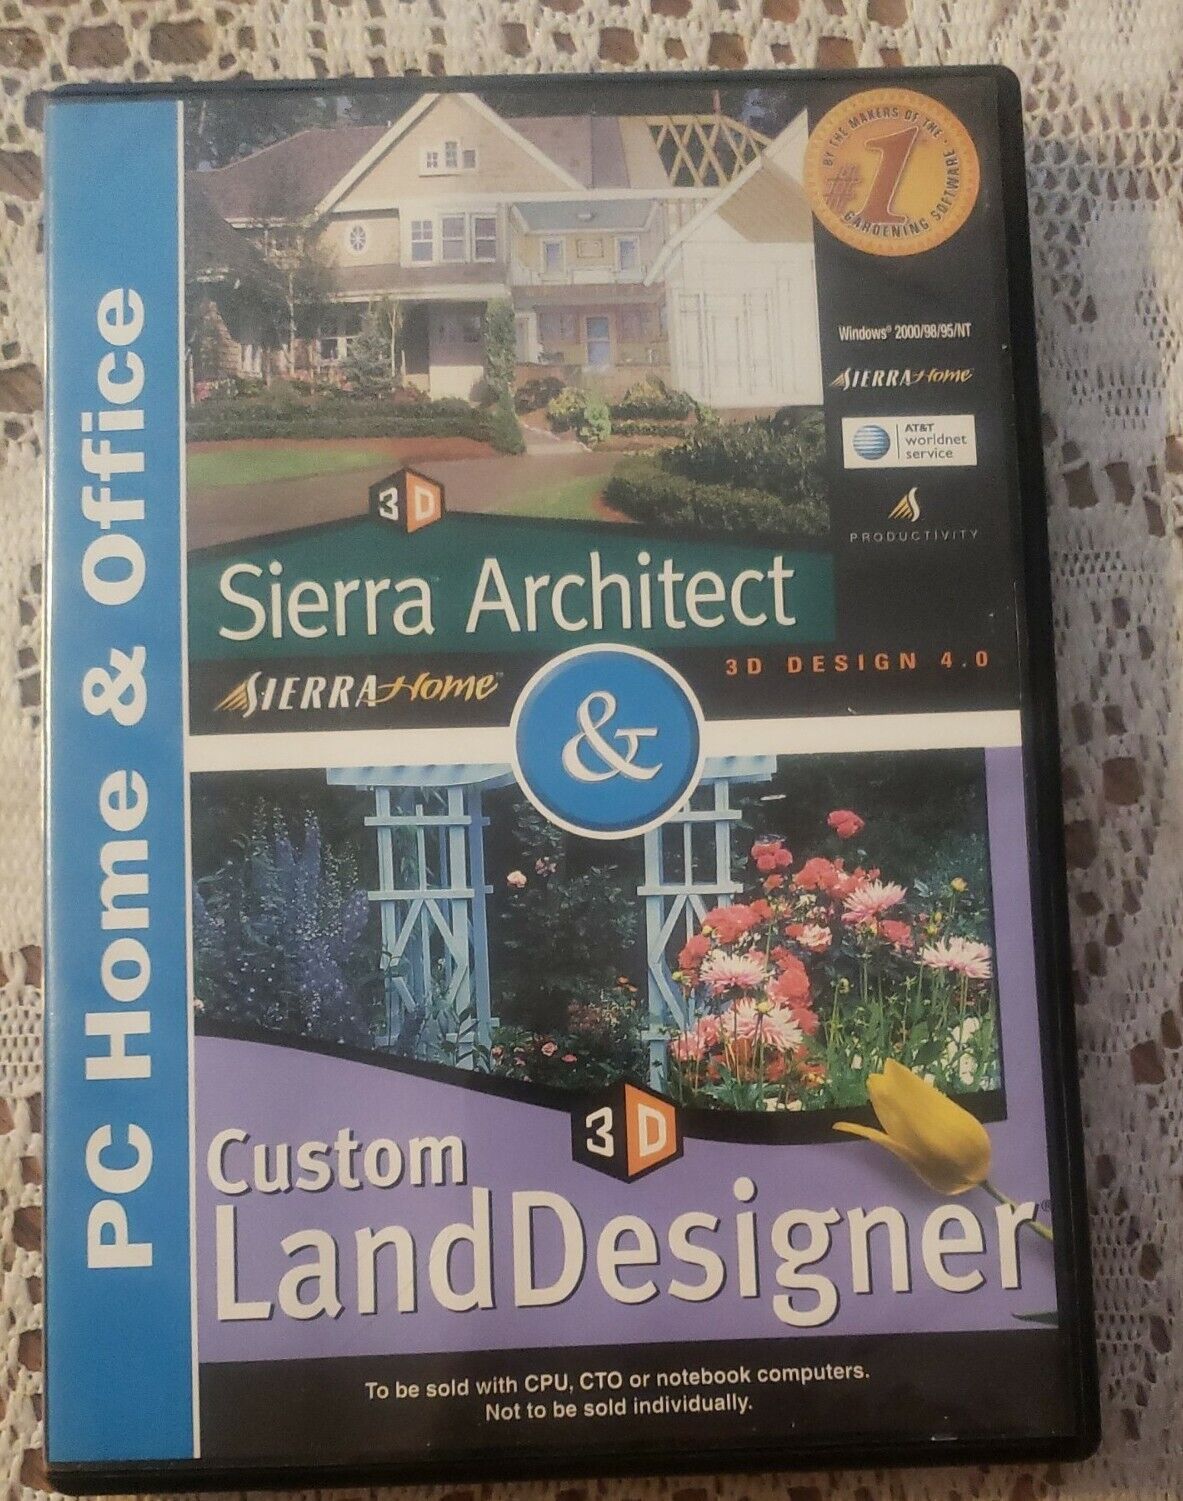 Land designer 3-D & sierra architect PC